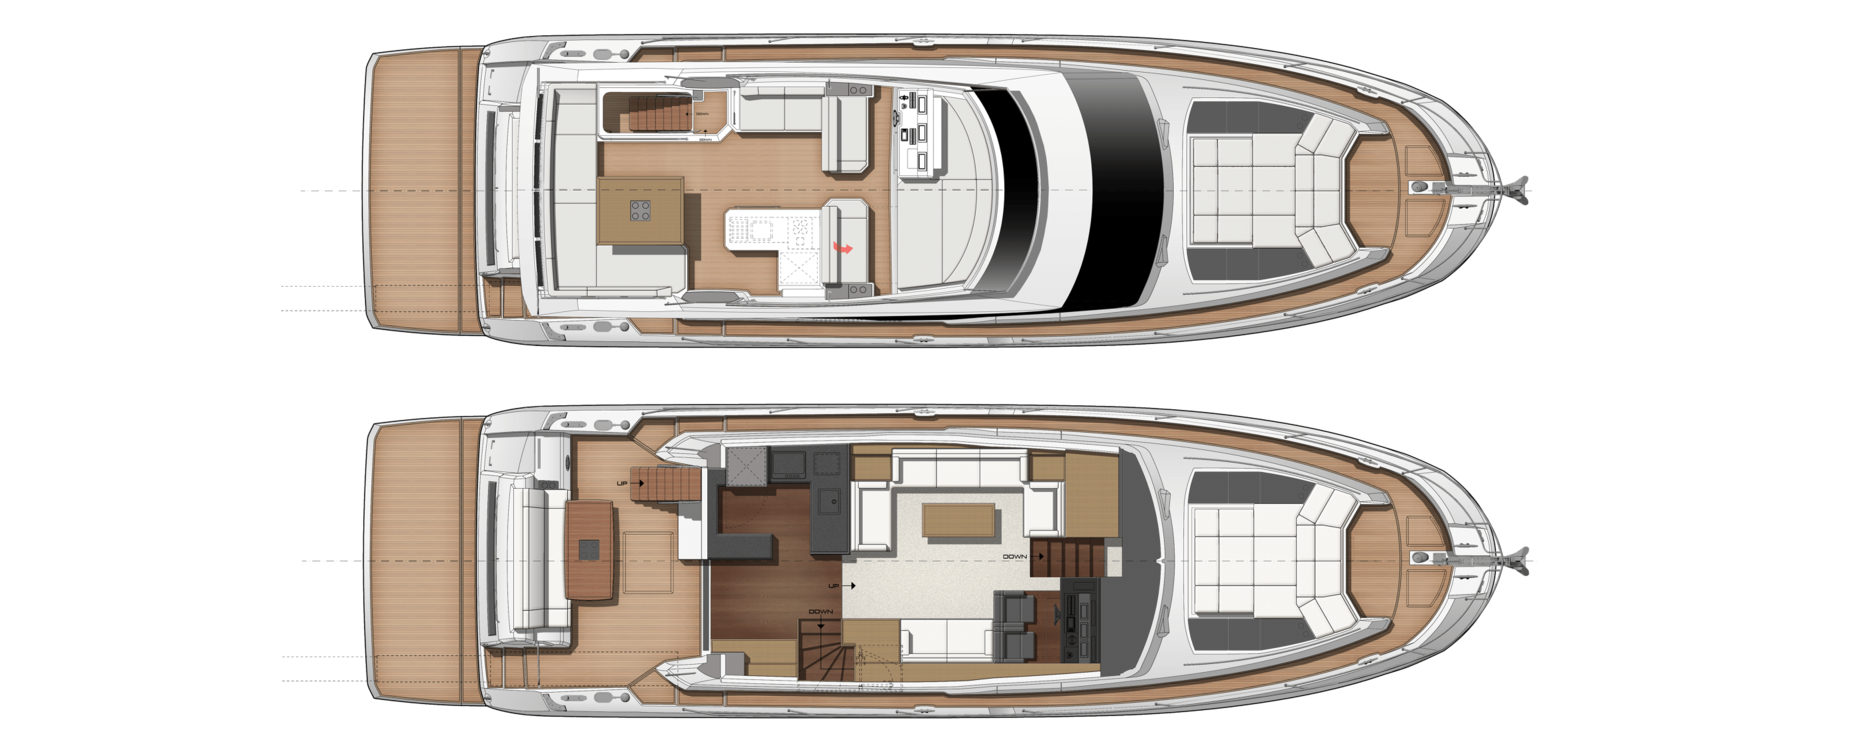 prestige 630 yacht charter layout